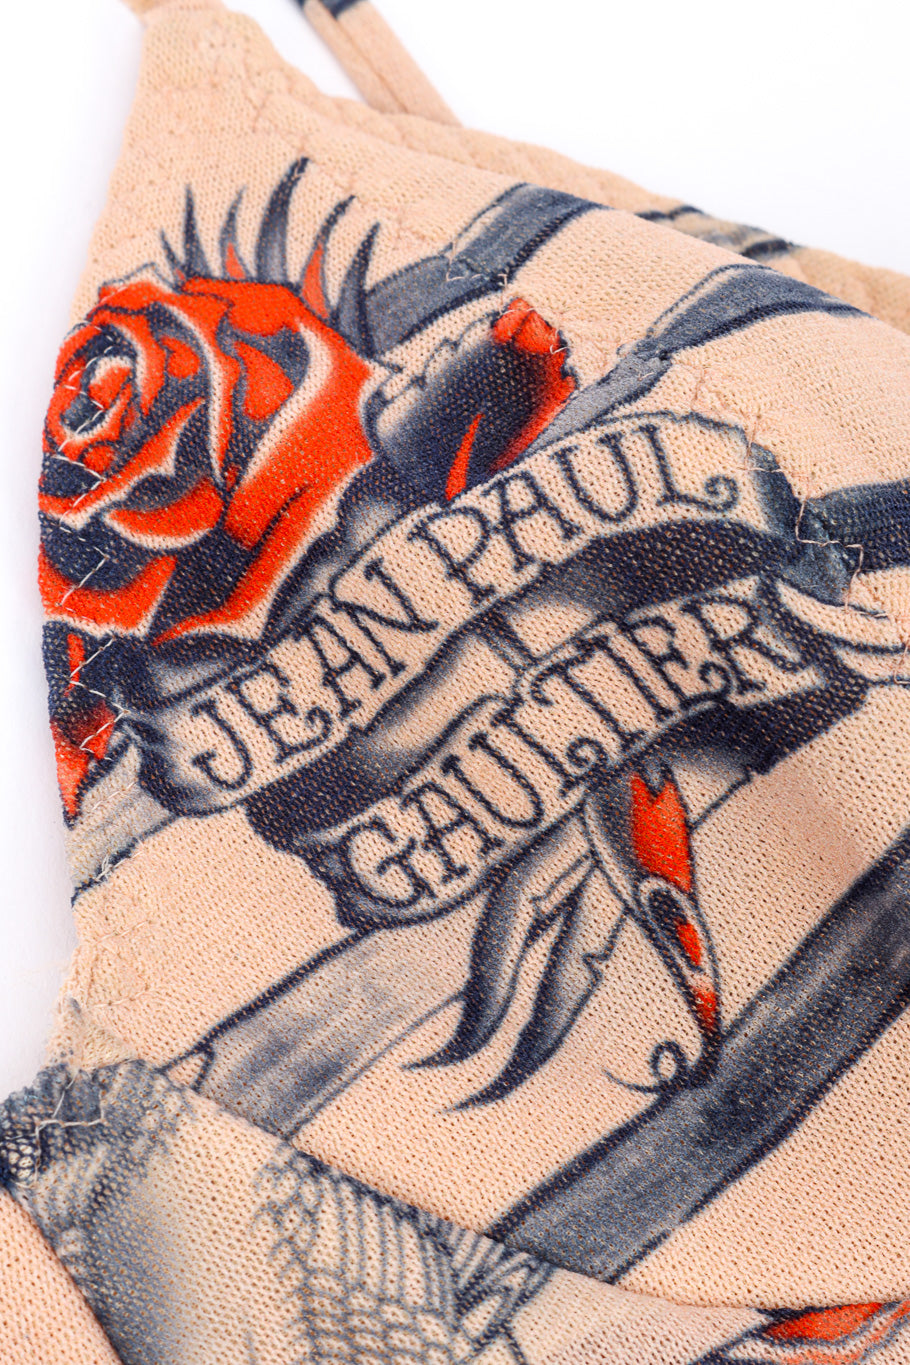 Jean Paul Gaultier 2012 S/S Soleil Tattoo Dress on mannequin signature @recessla